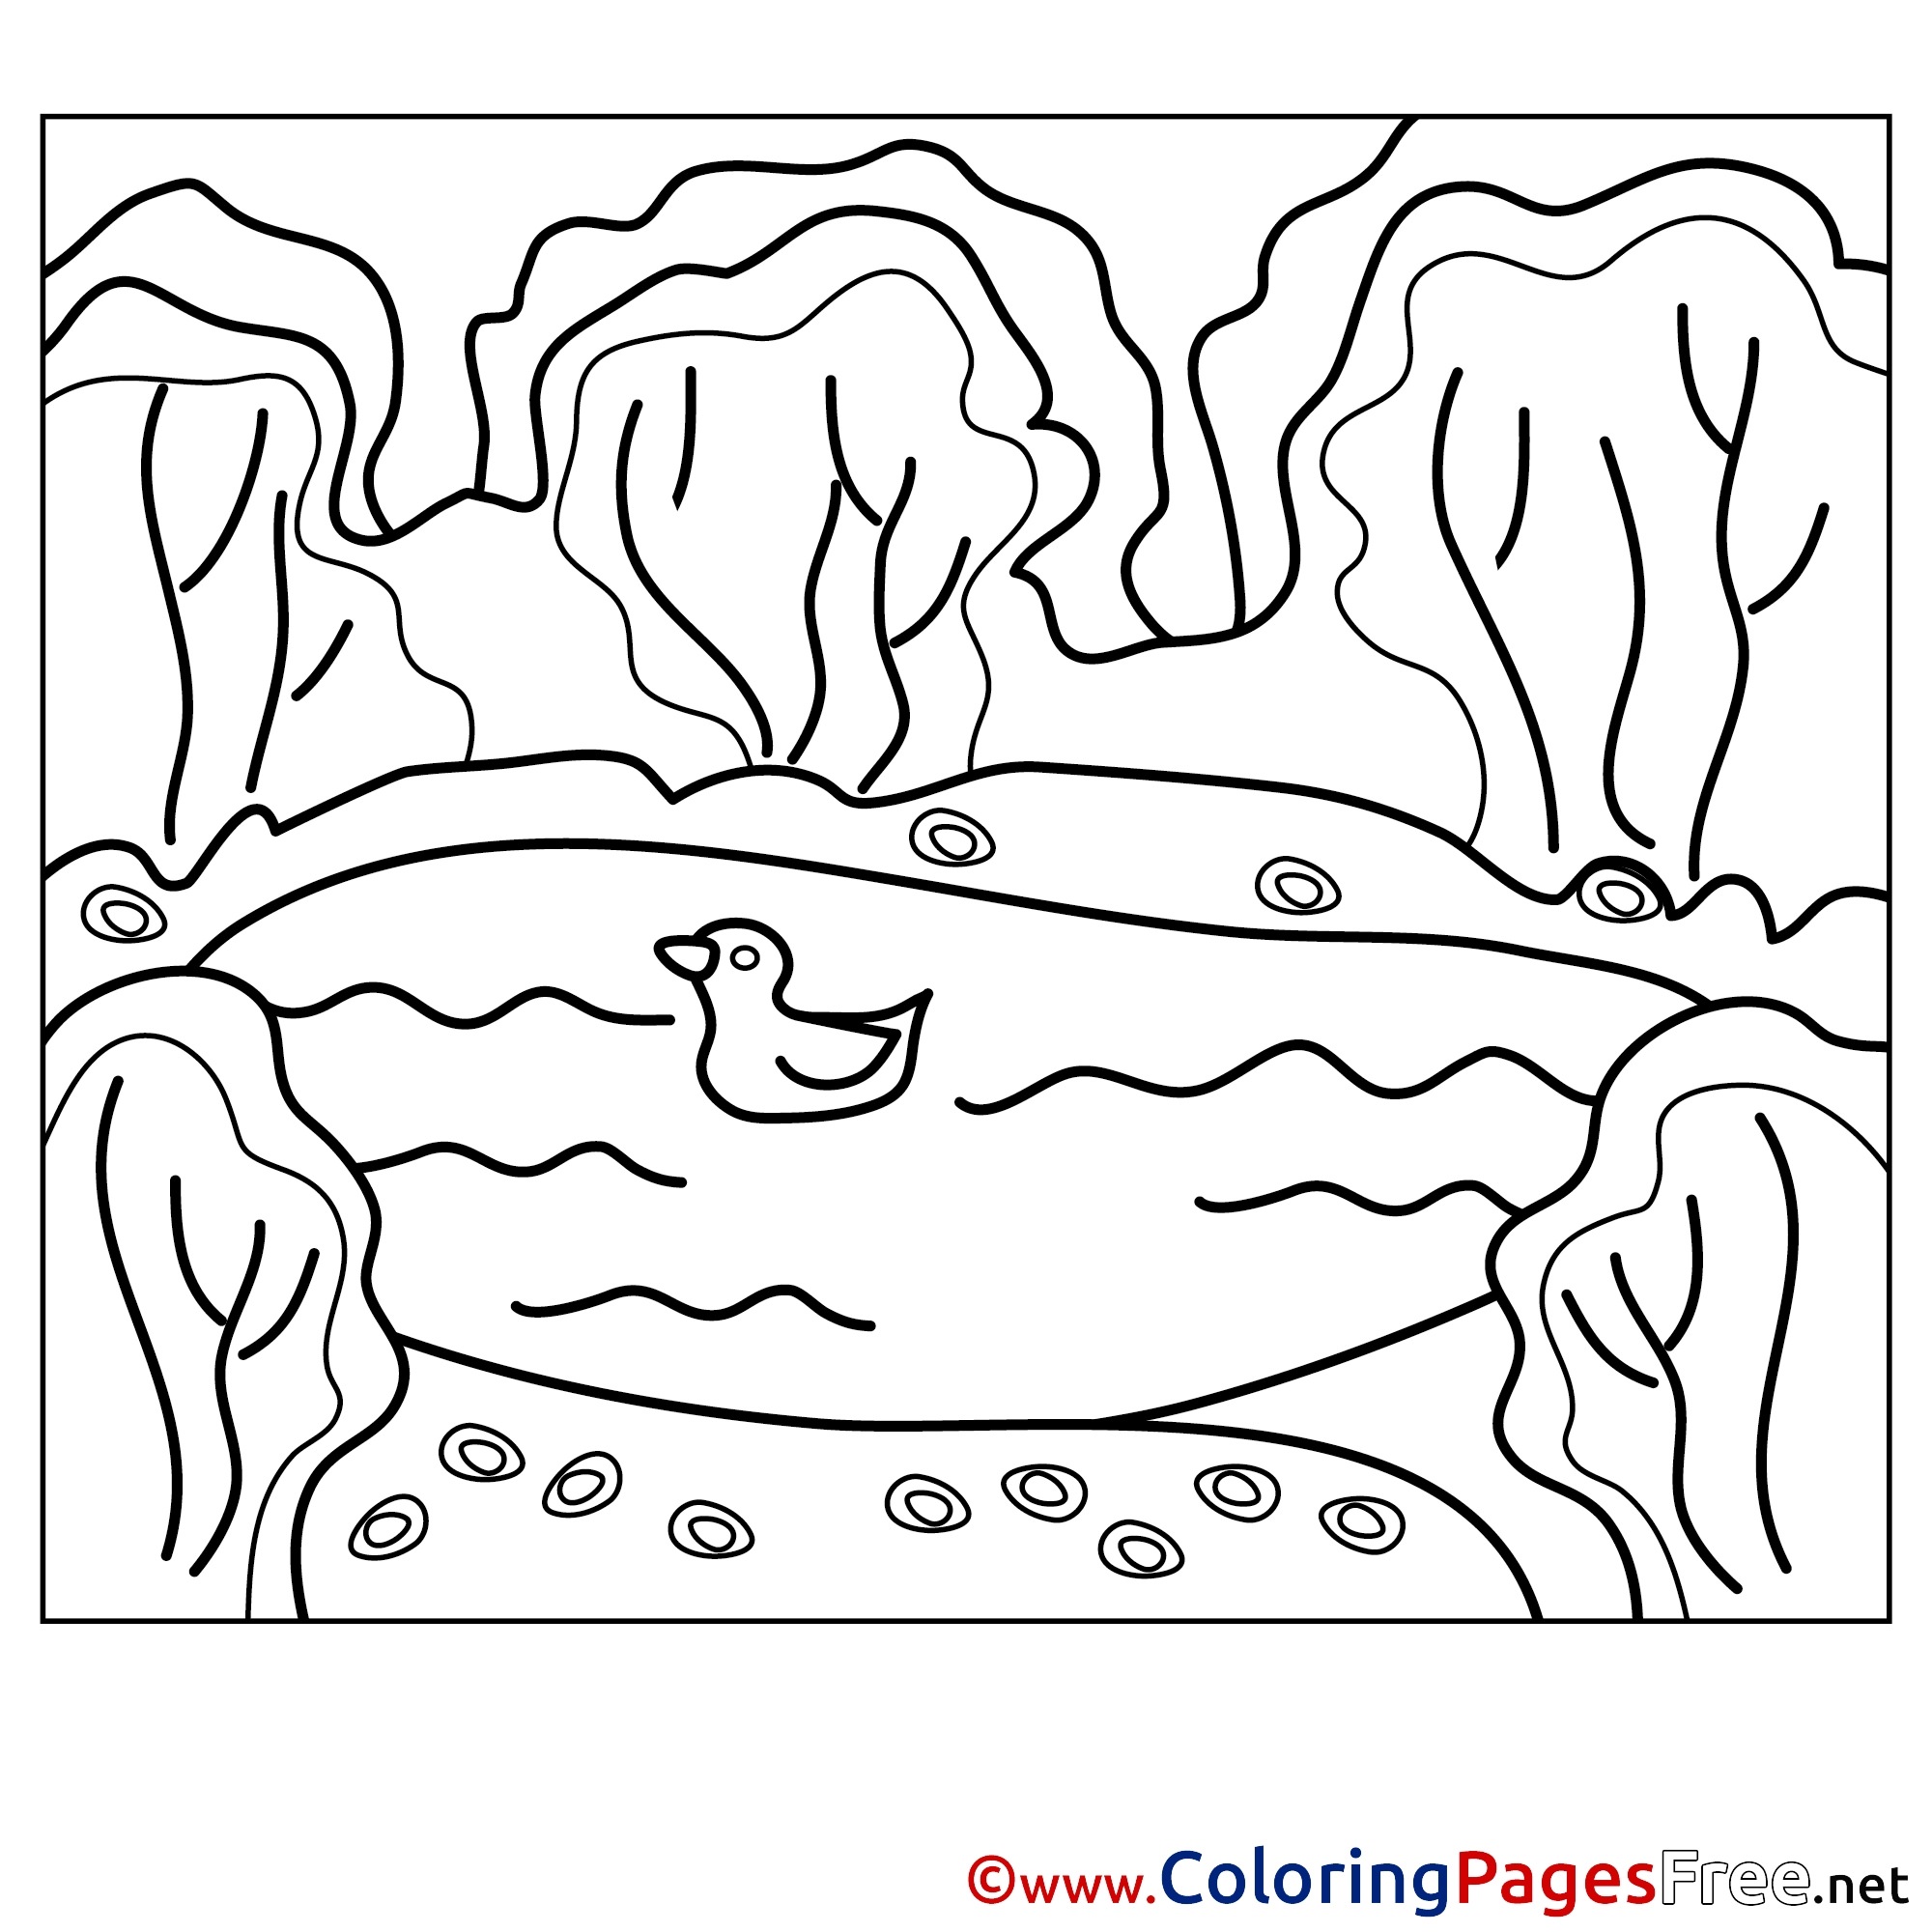 Lake colour. Озеро раскраска. Раскраска водоем. Водоем раскраска для детей. Озеро раскраска для детей.